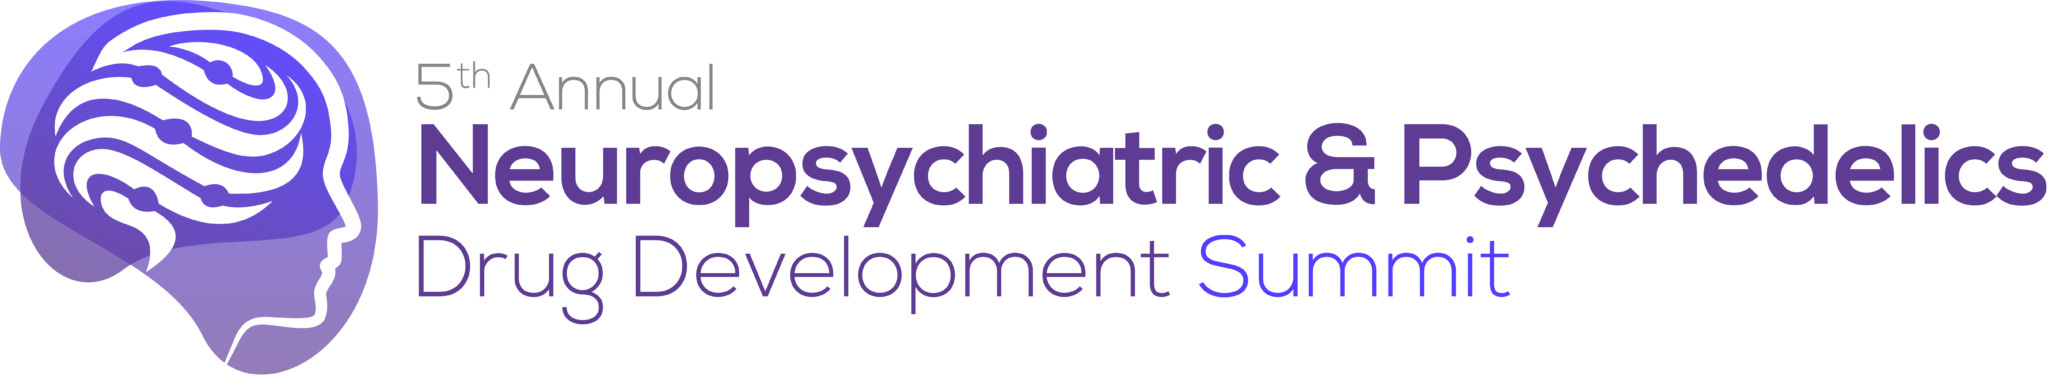 HW220704-5th-Neuropsychiatric-and-Psychedelics-Drug-Development-Summit-logo-FINAL-2048x391-1